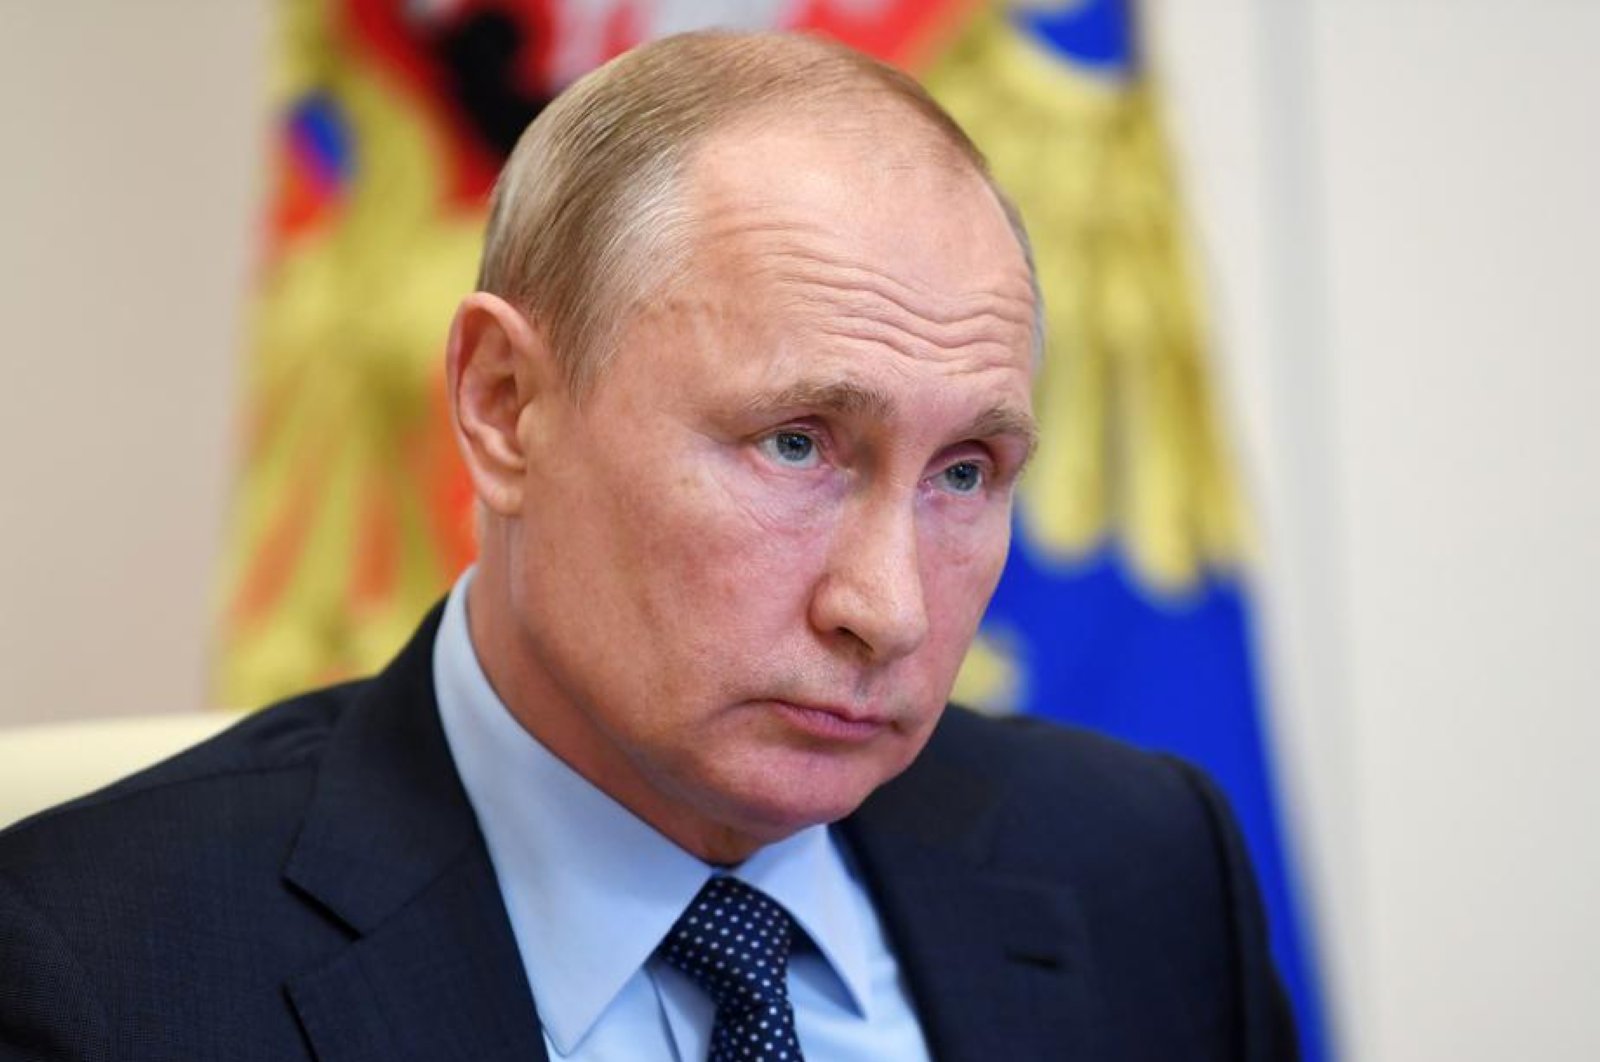 Will Vladimir Putin remain President of Russia through 2022?